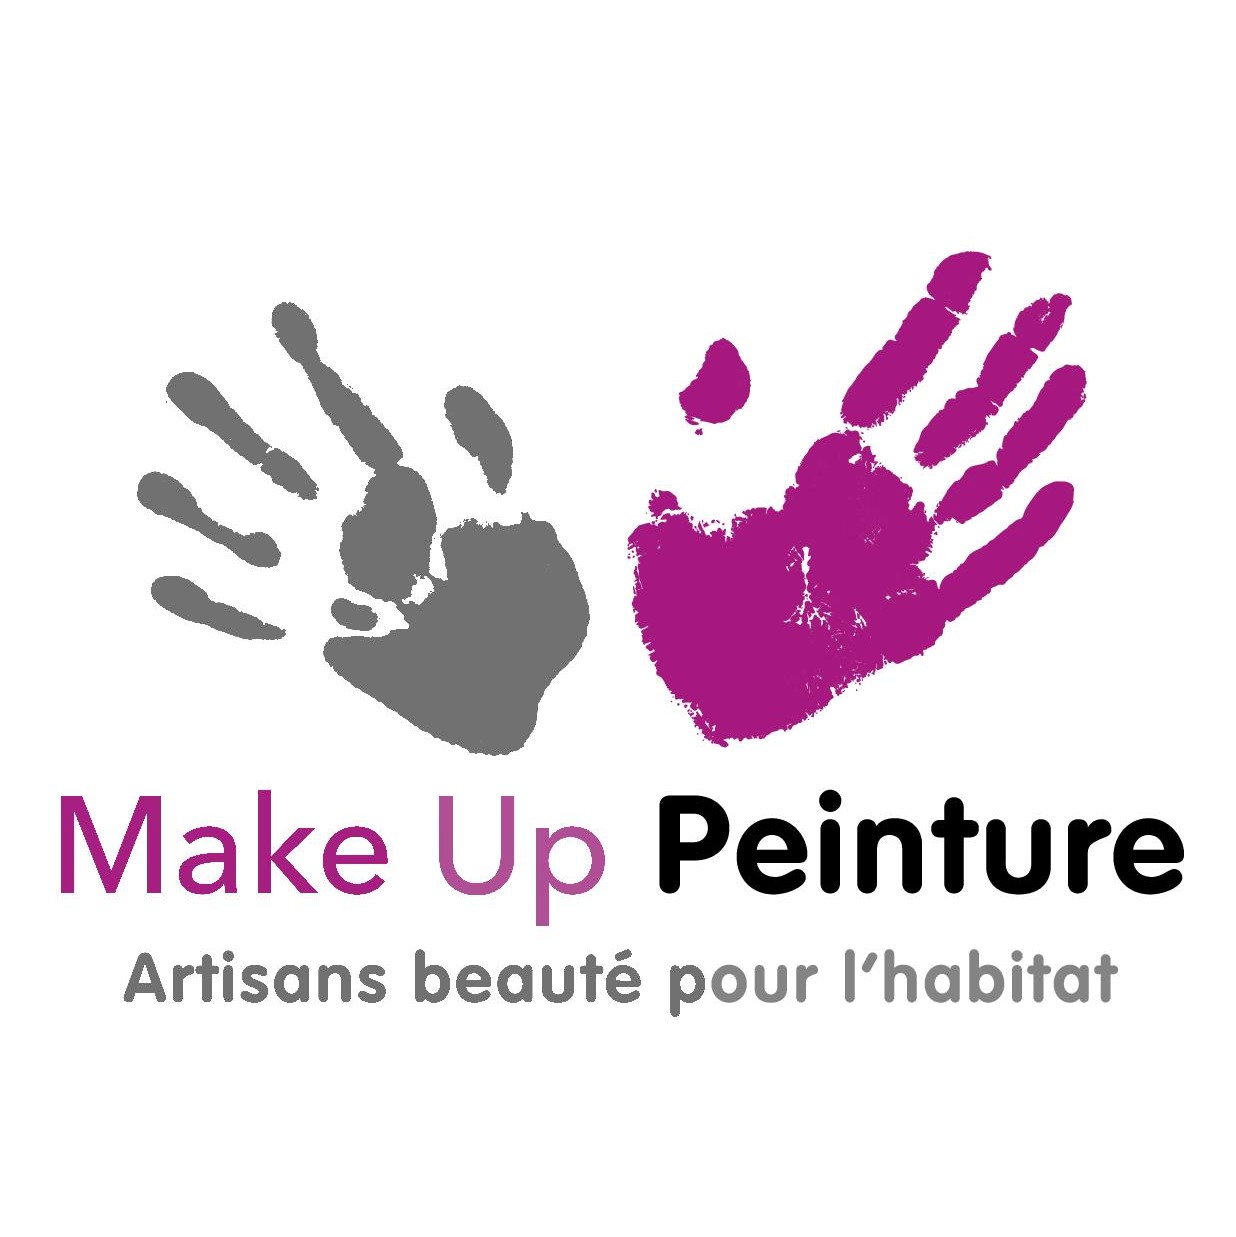 Make Up Peinture